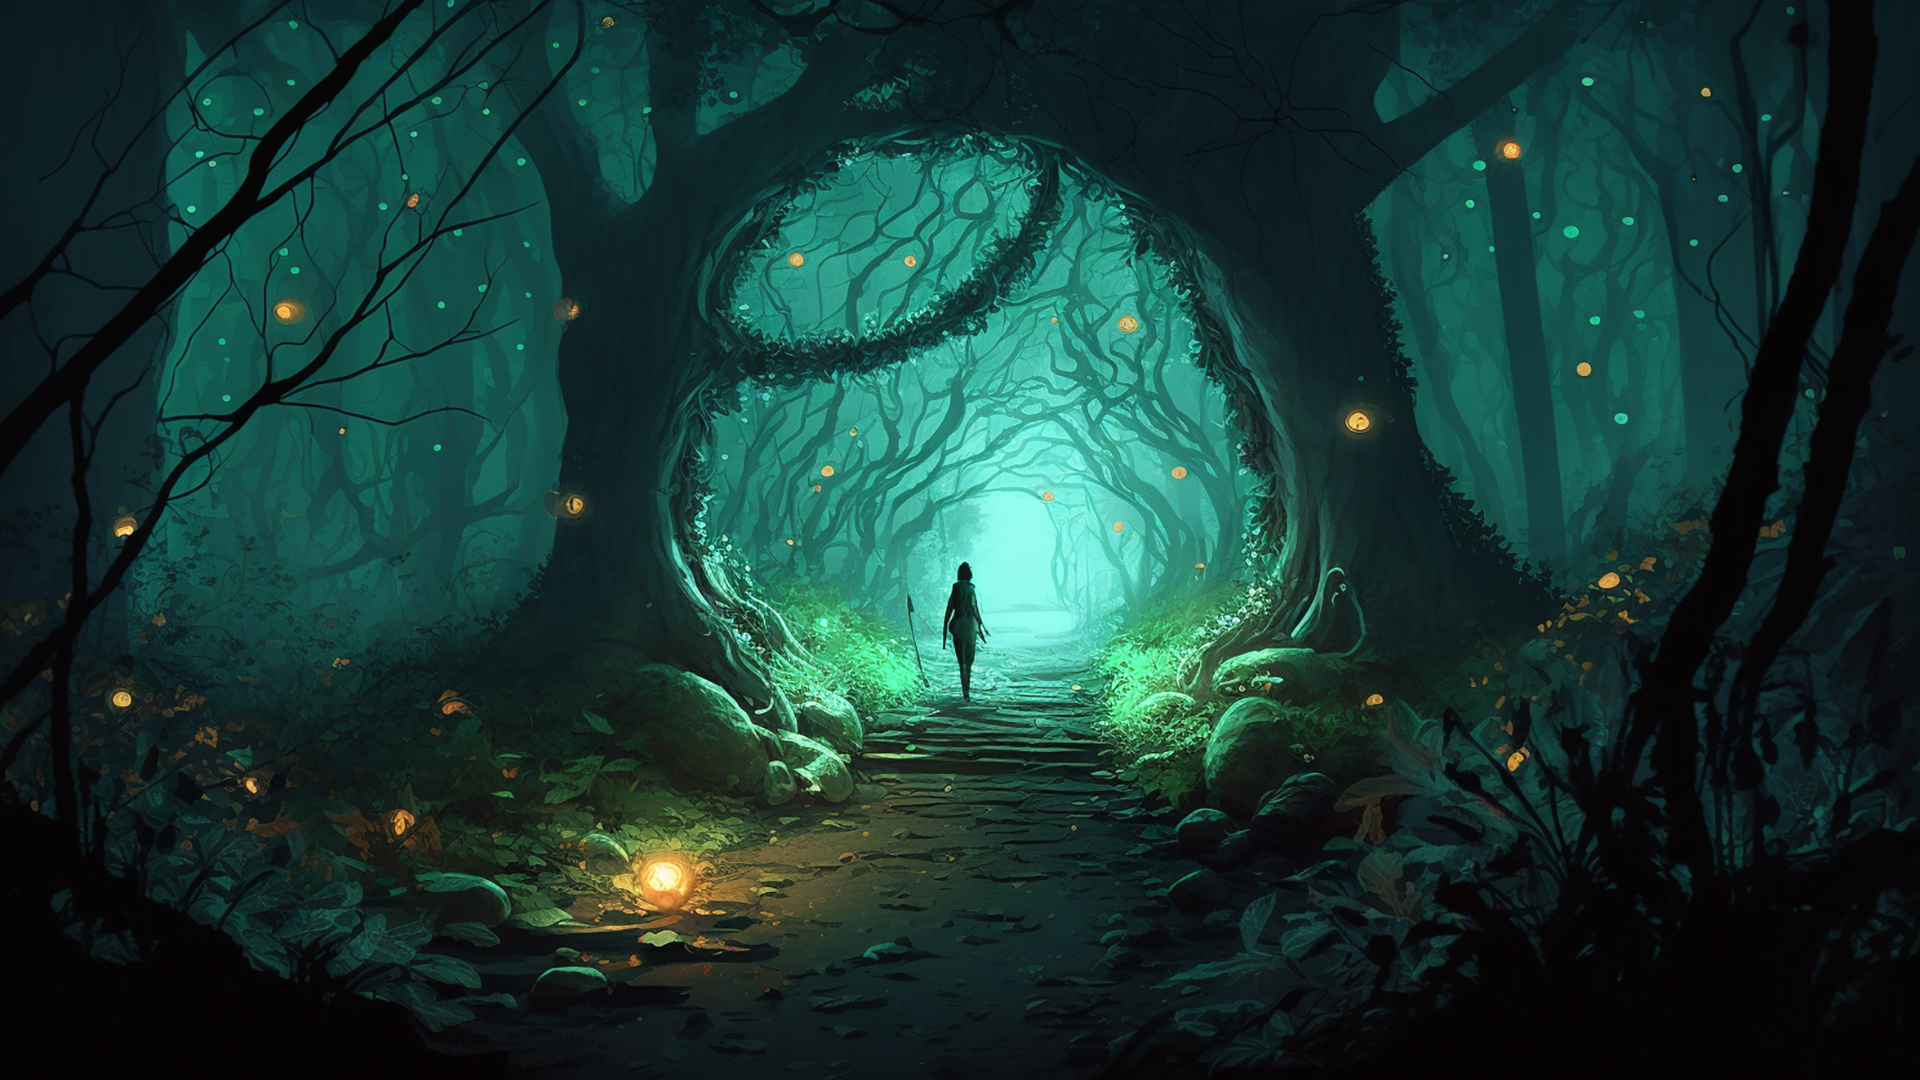 a walk trhough a magical dream forest